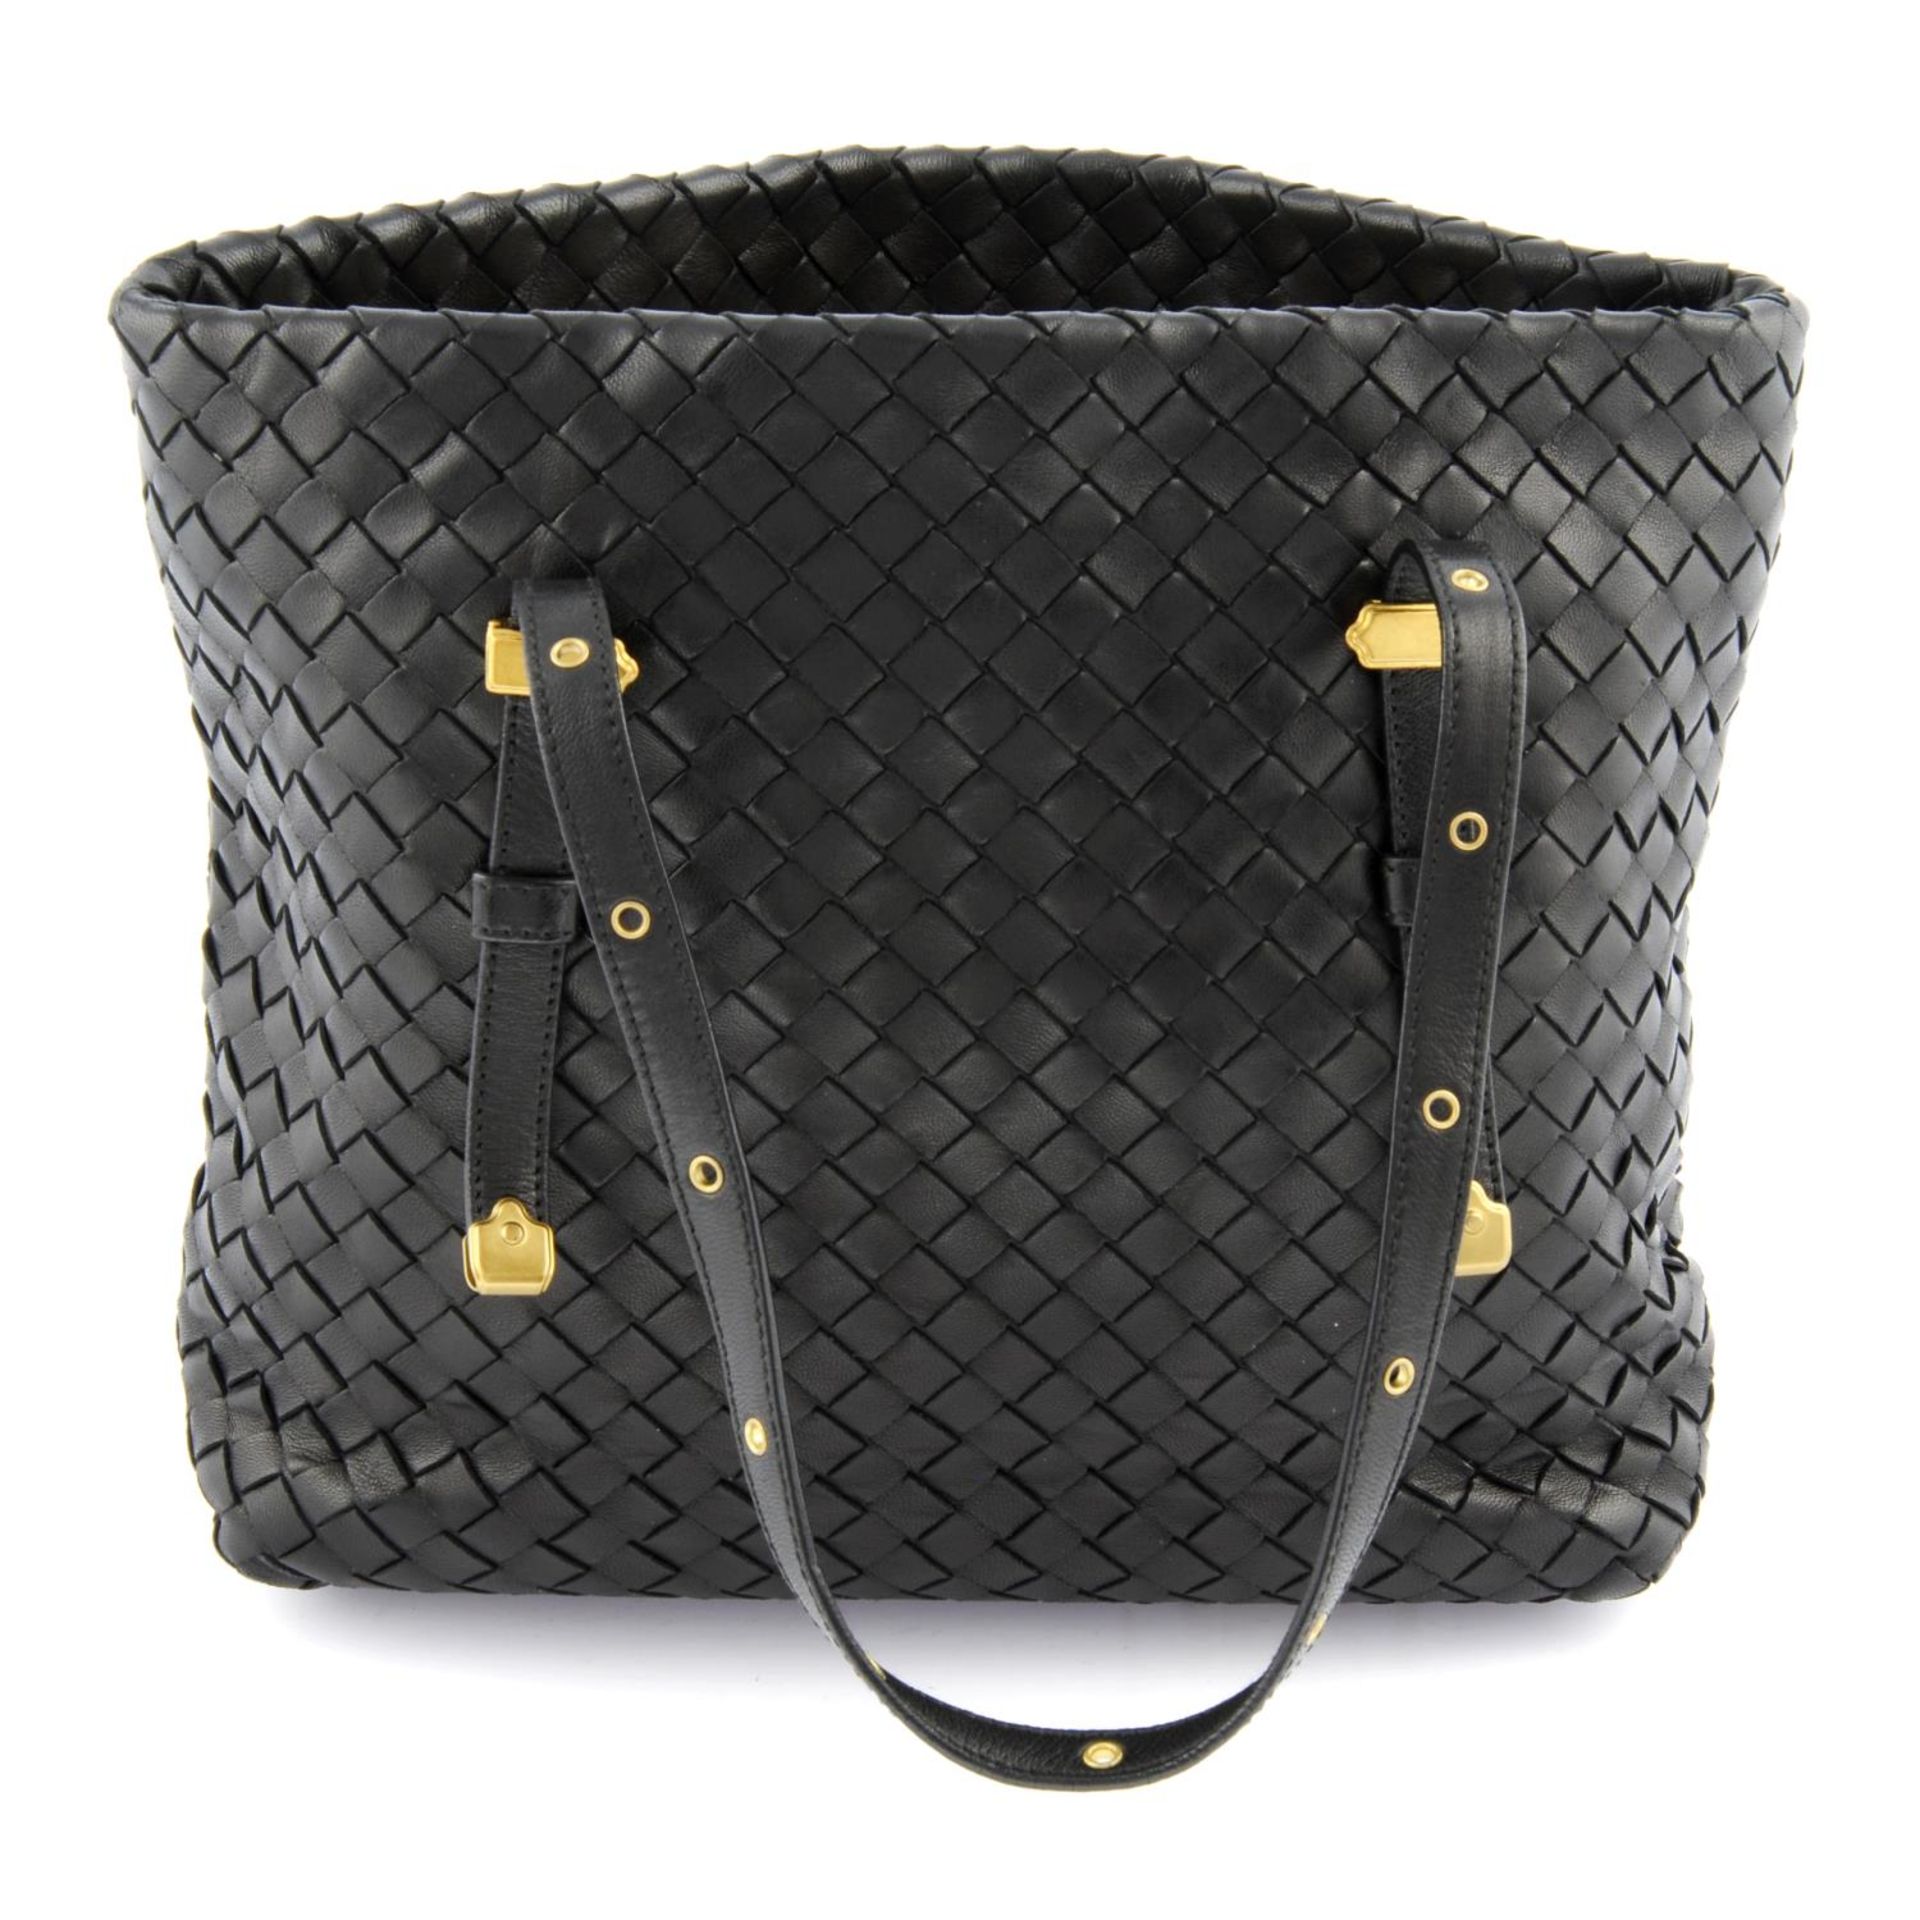 BOTTEGA VENETA - a black intrecciato leather handbag. - Image 2 of 4